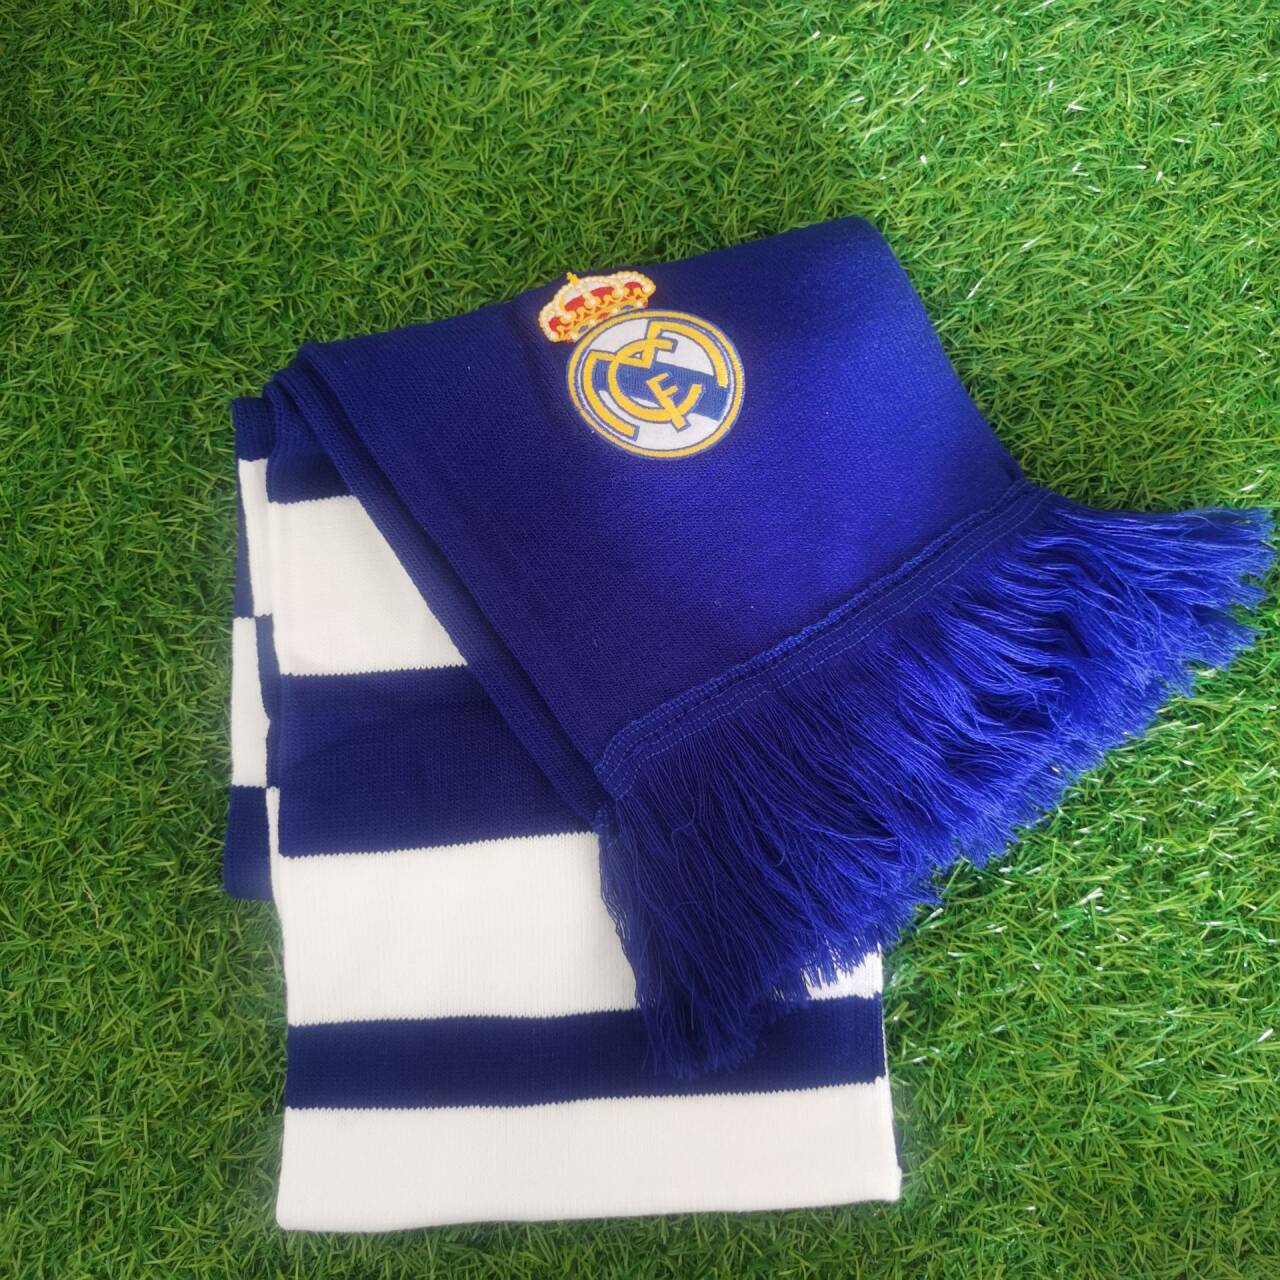 Best Gift Real Madrid Bundle